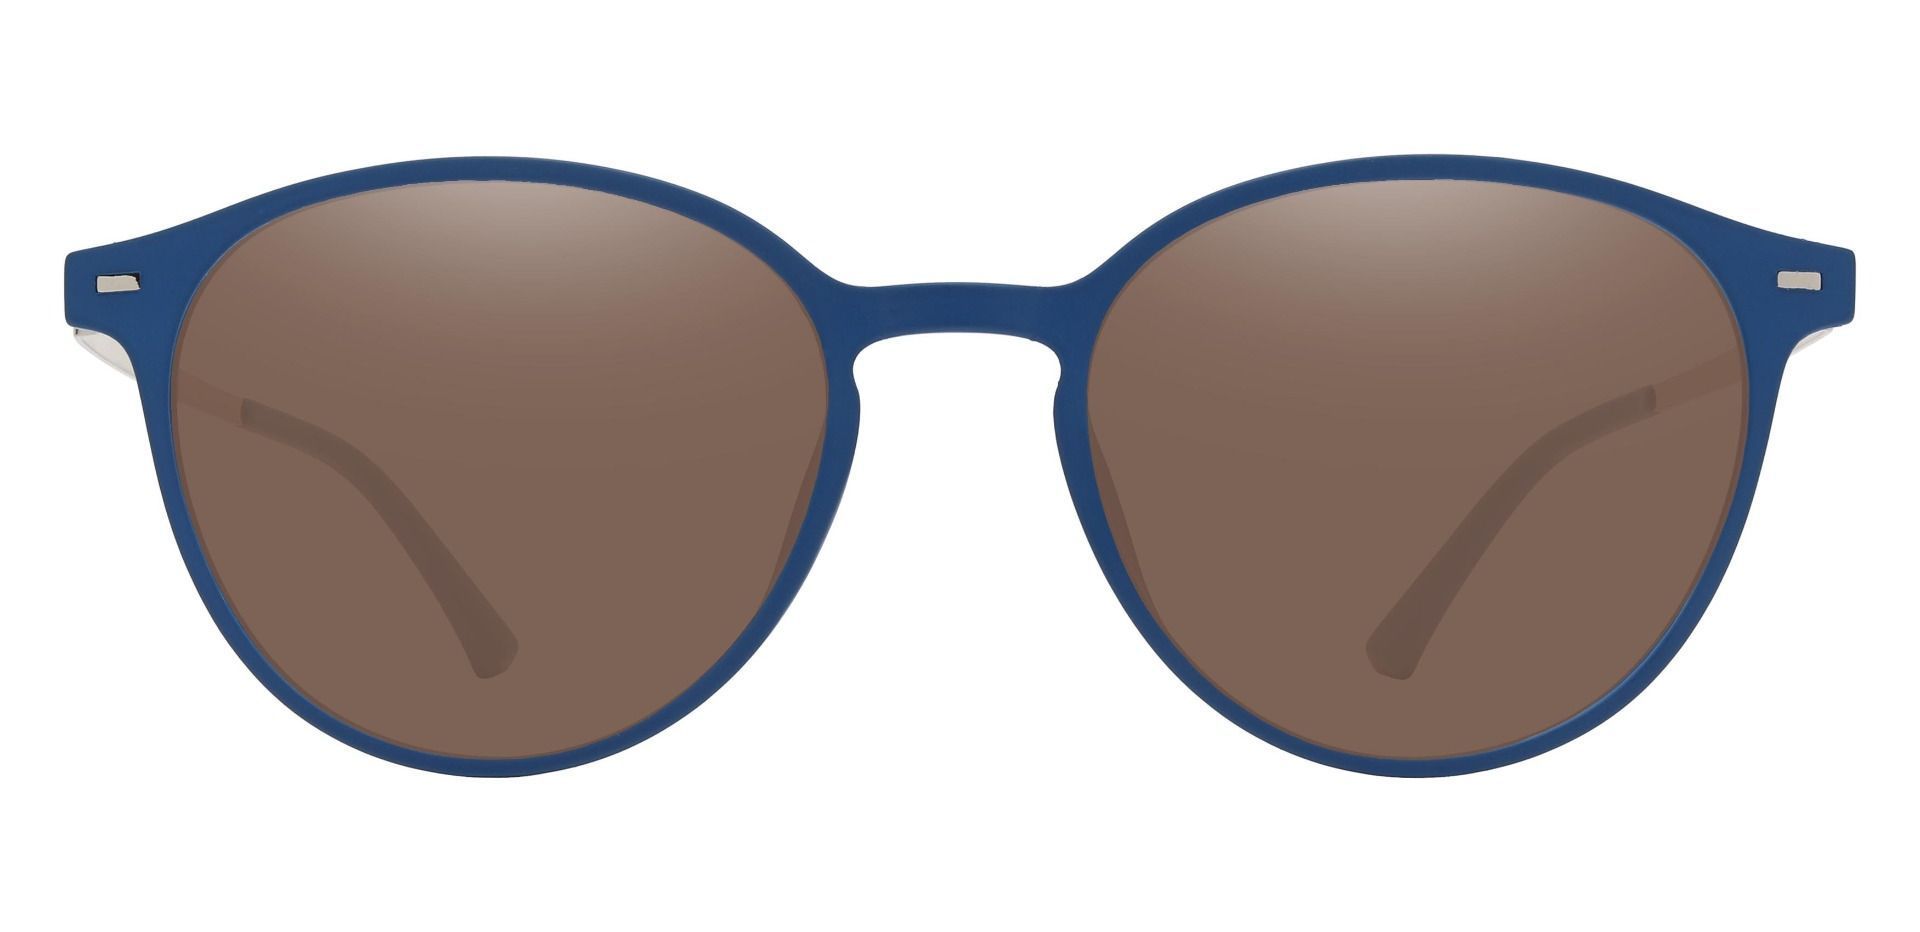 Springer Round Non-Rx Sunglasses - Blue Frame With Brown Lenses